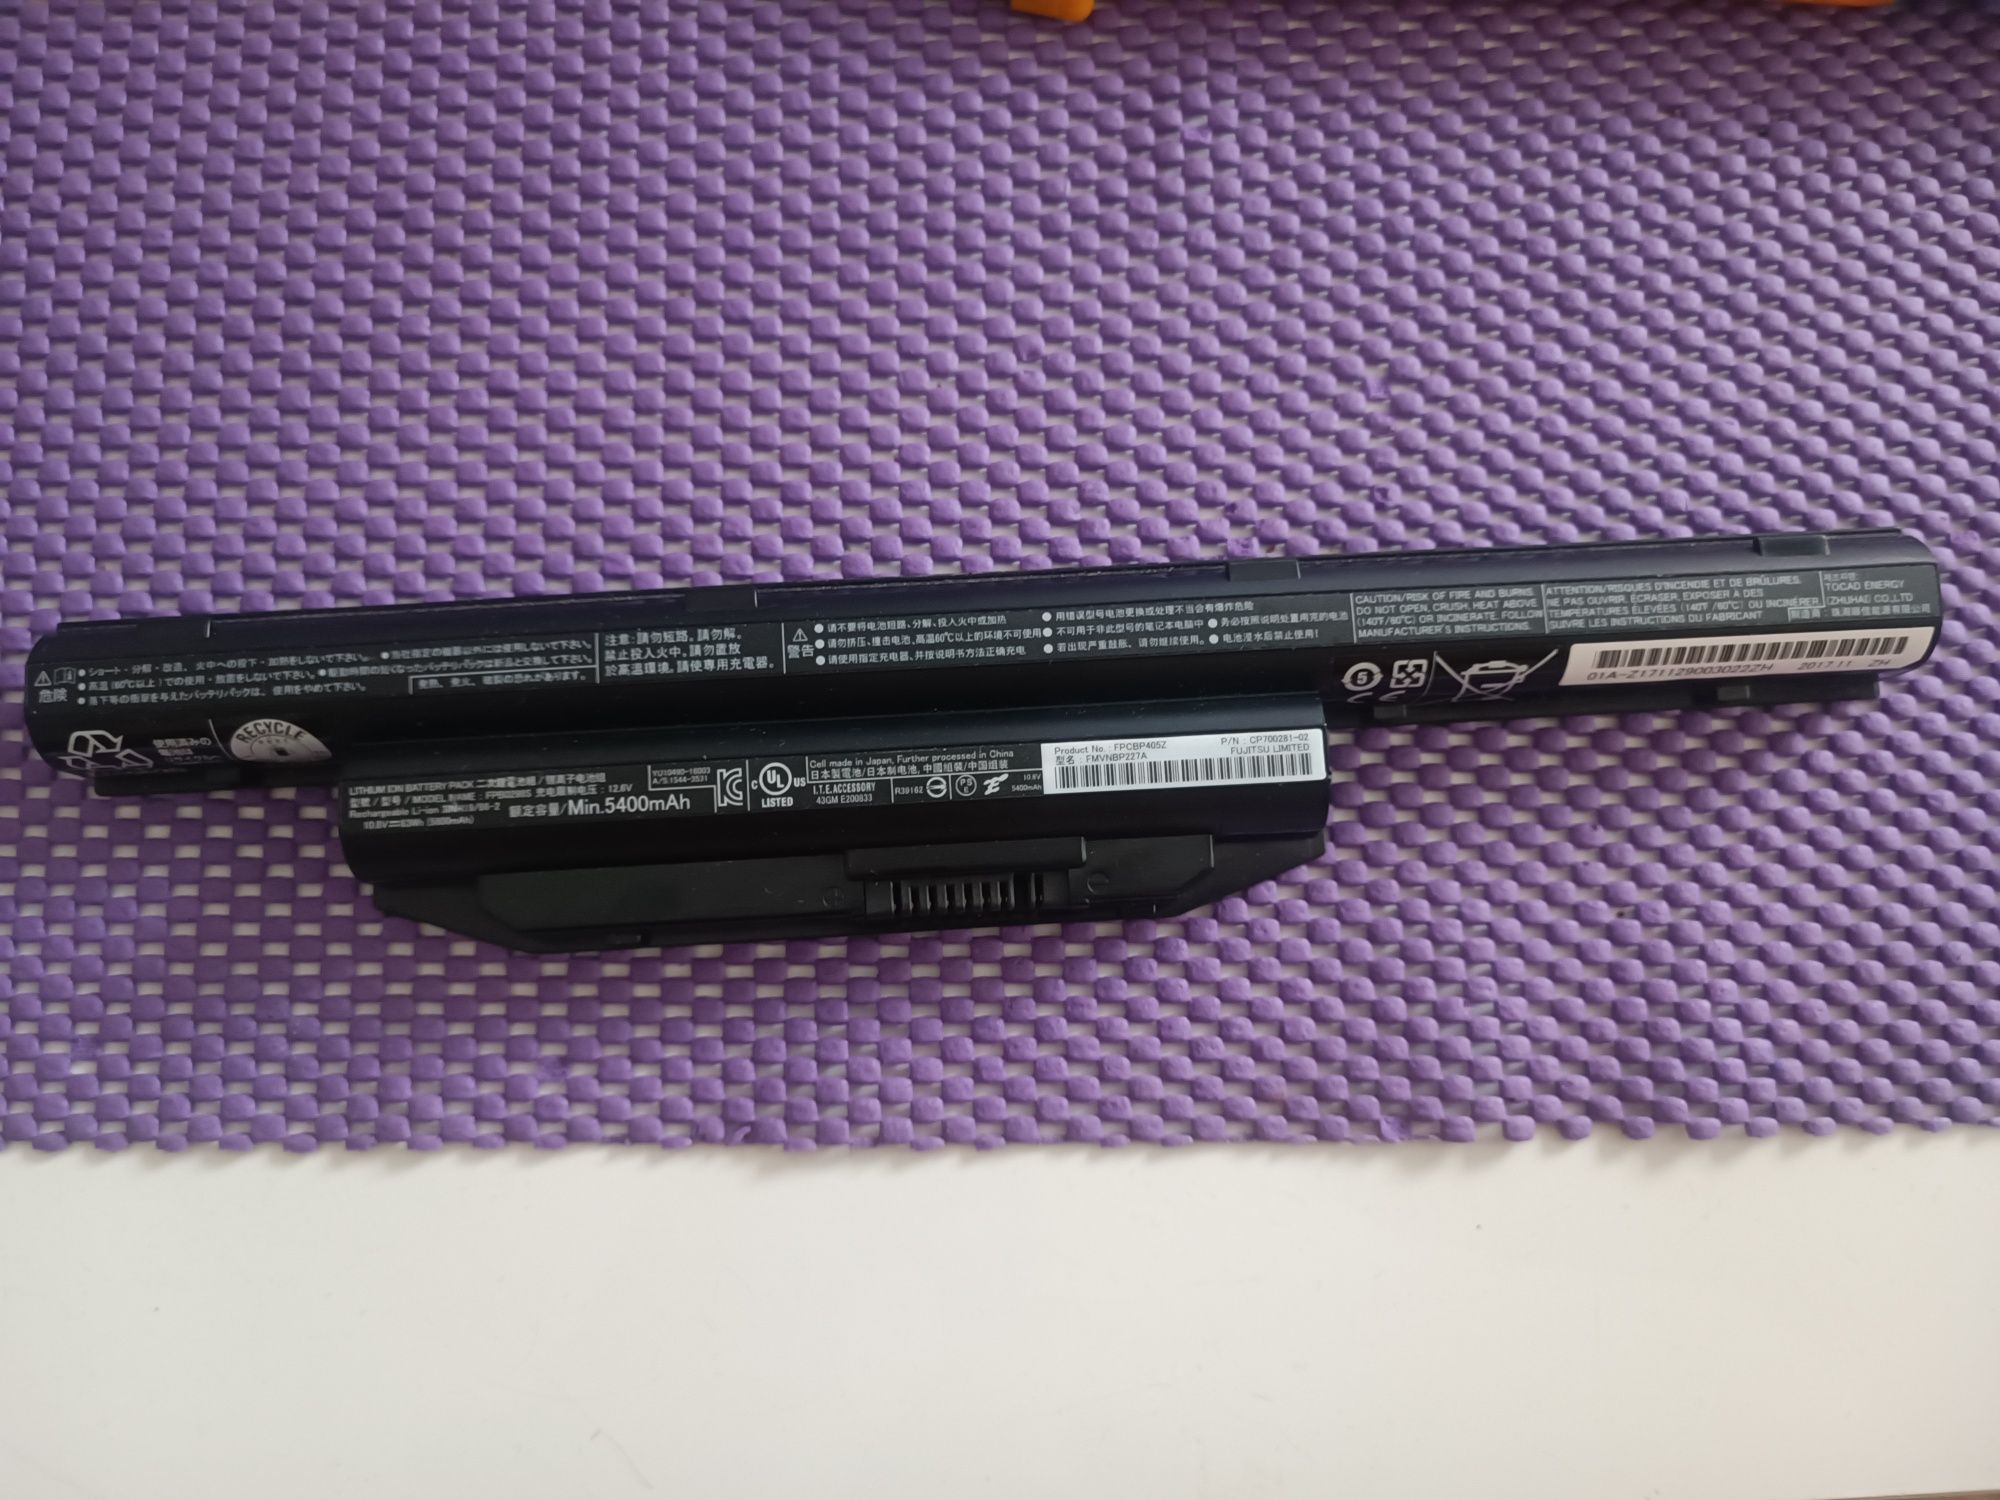 Oryginalna bateria do laptopa Fujitsu sprawna 3h30min